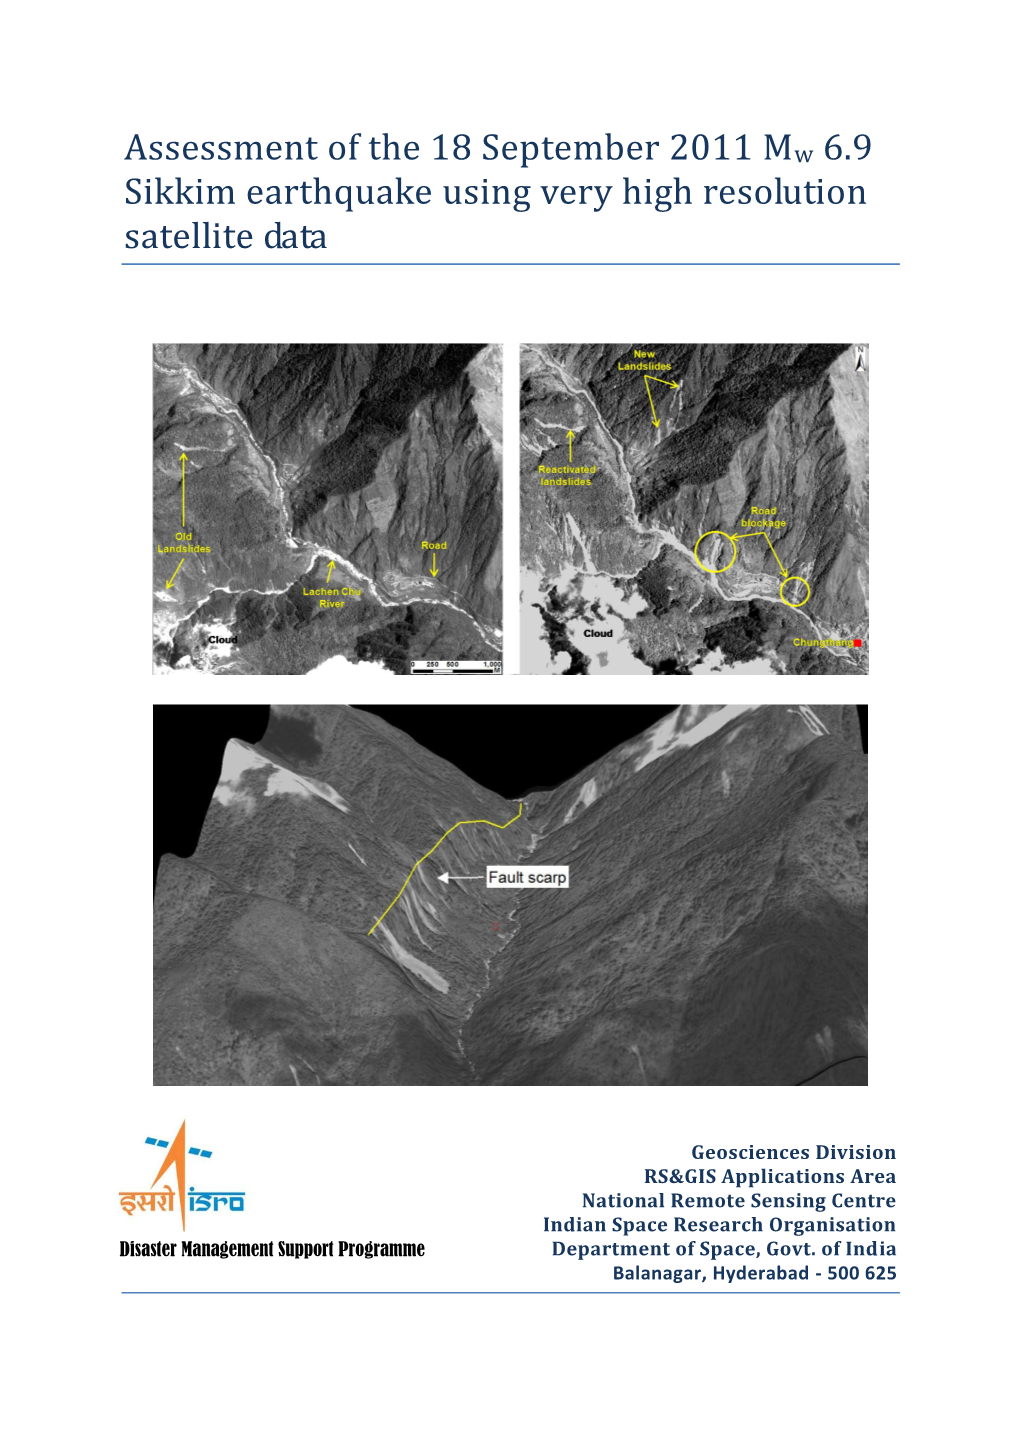 Assessment of the 18 September 2011 Mw 6.9 Sikkim Earthquake Using Very High Resolution Satellite Data